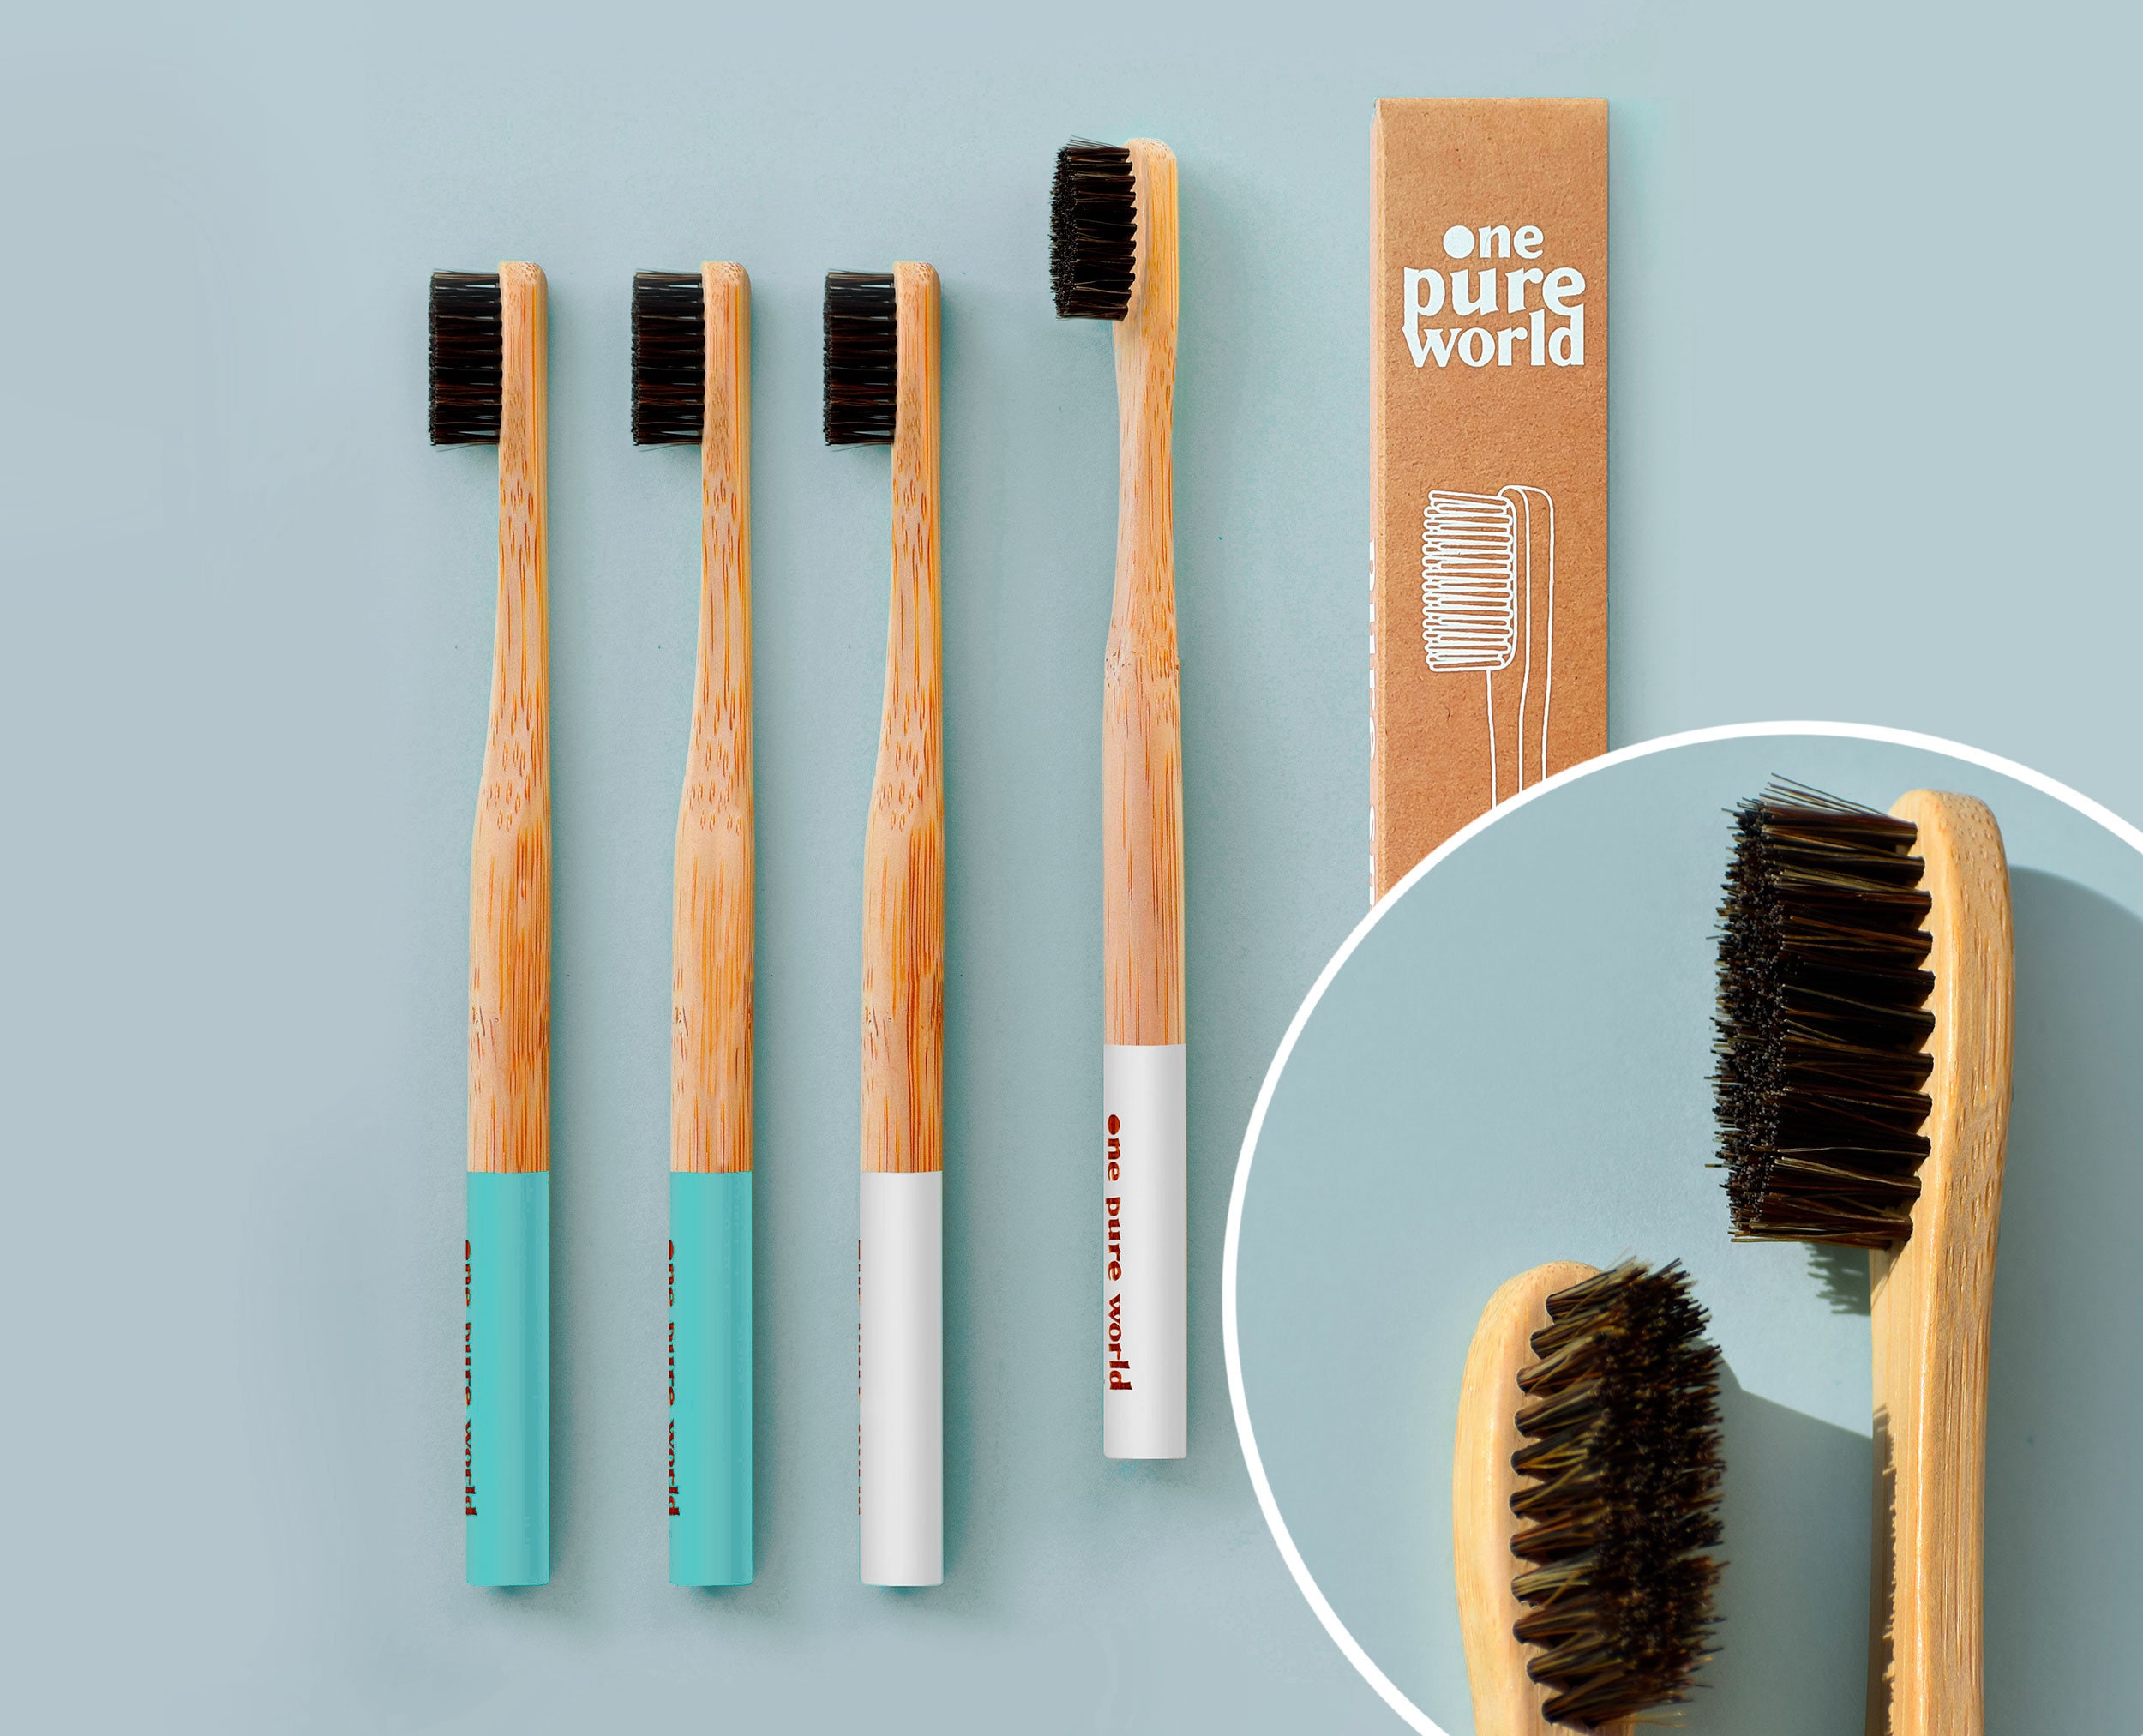 Toothbrush Style - Horsehair Brush - Large